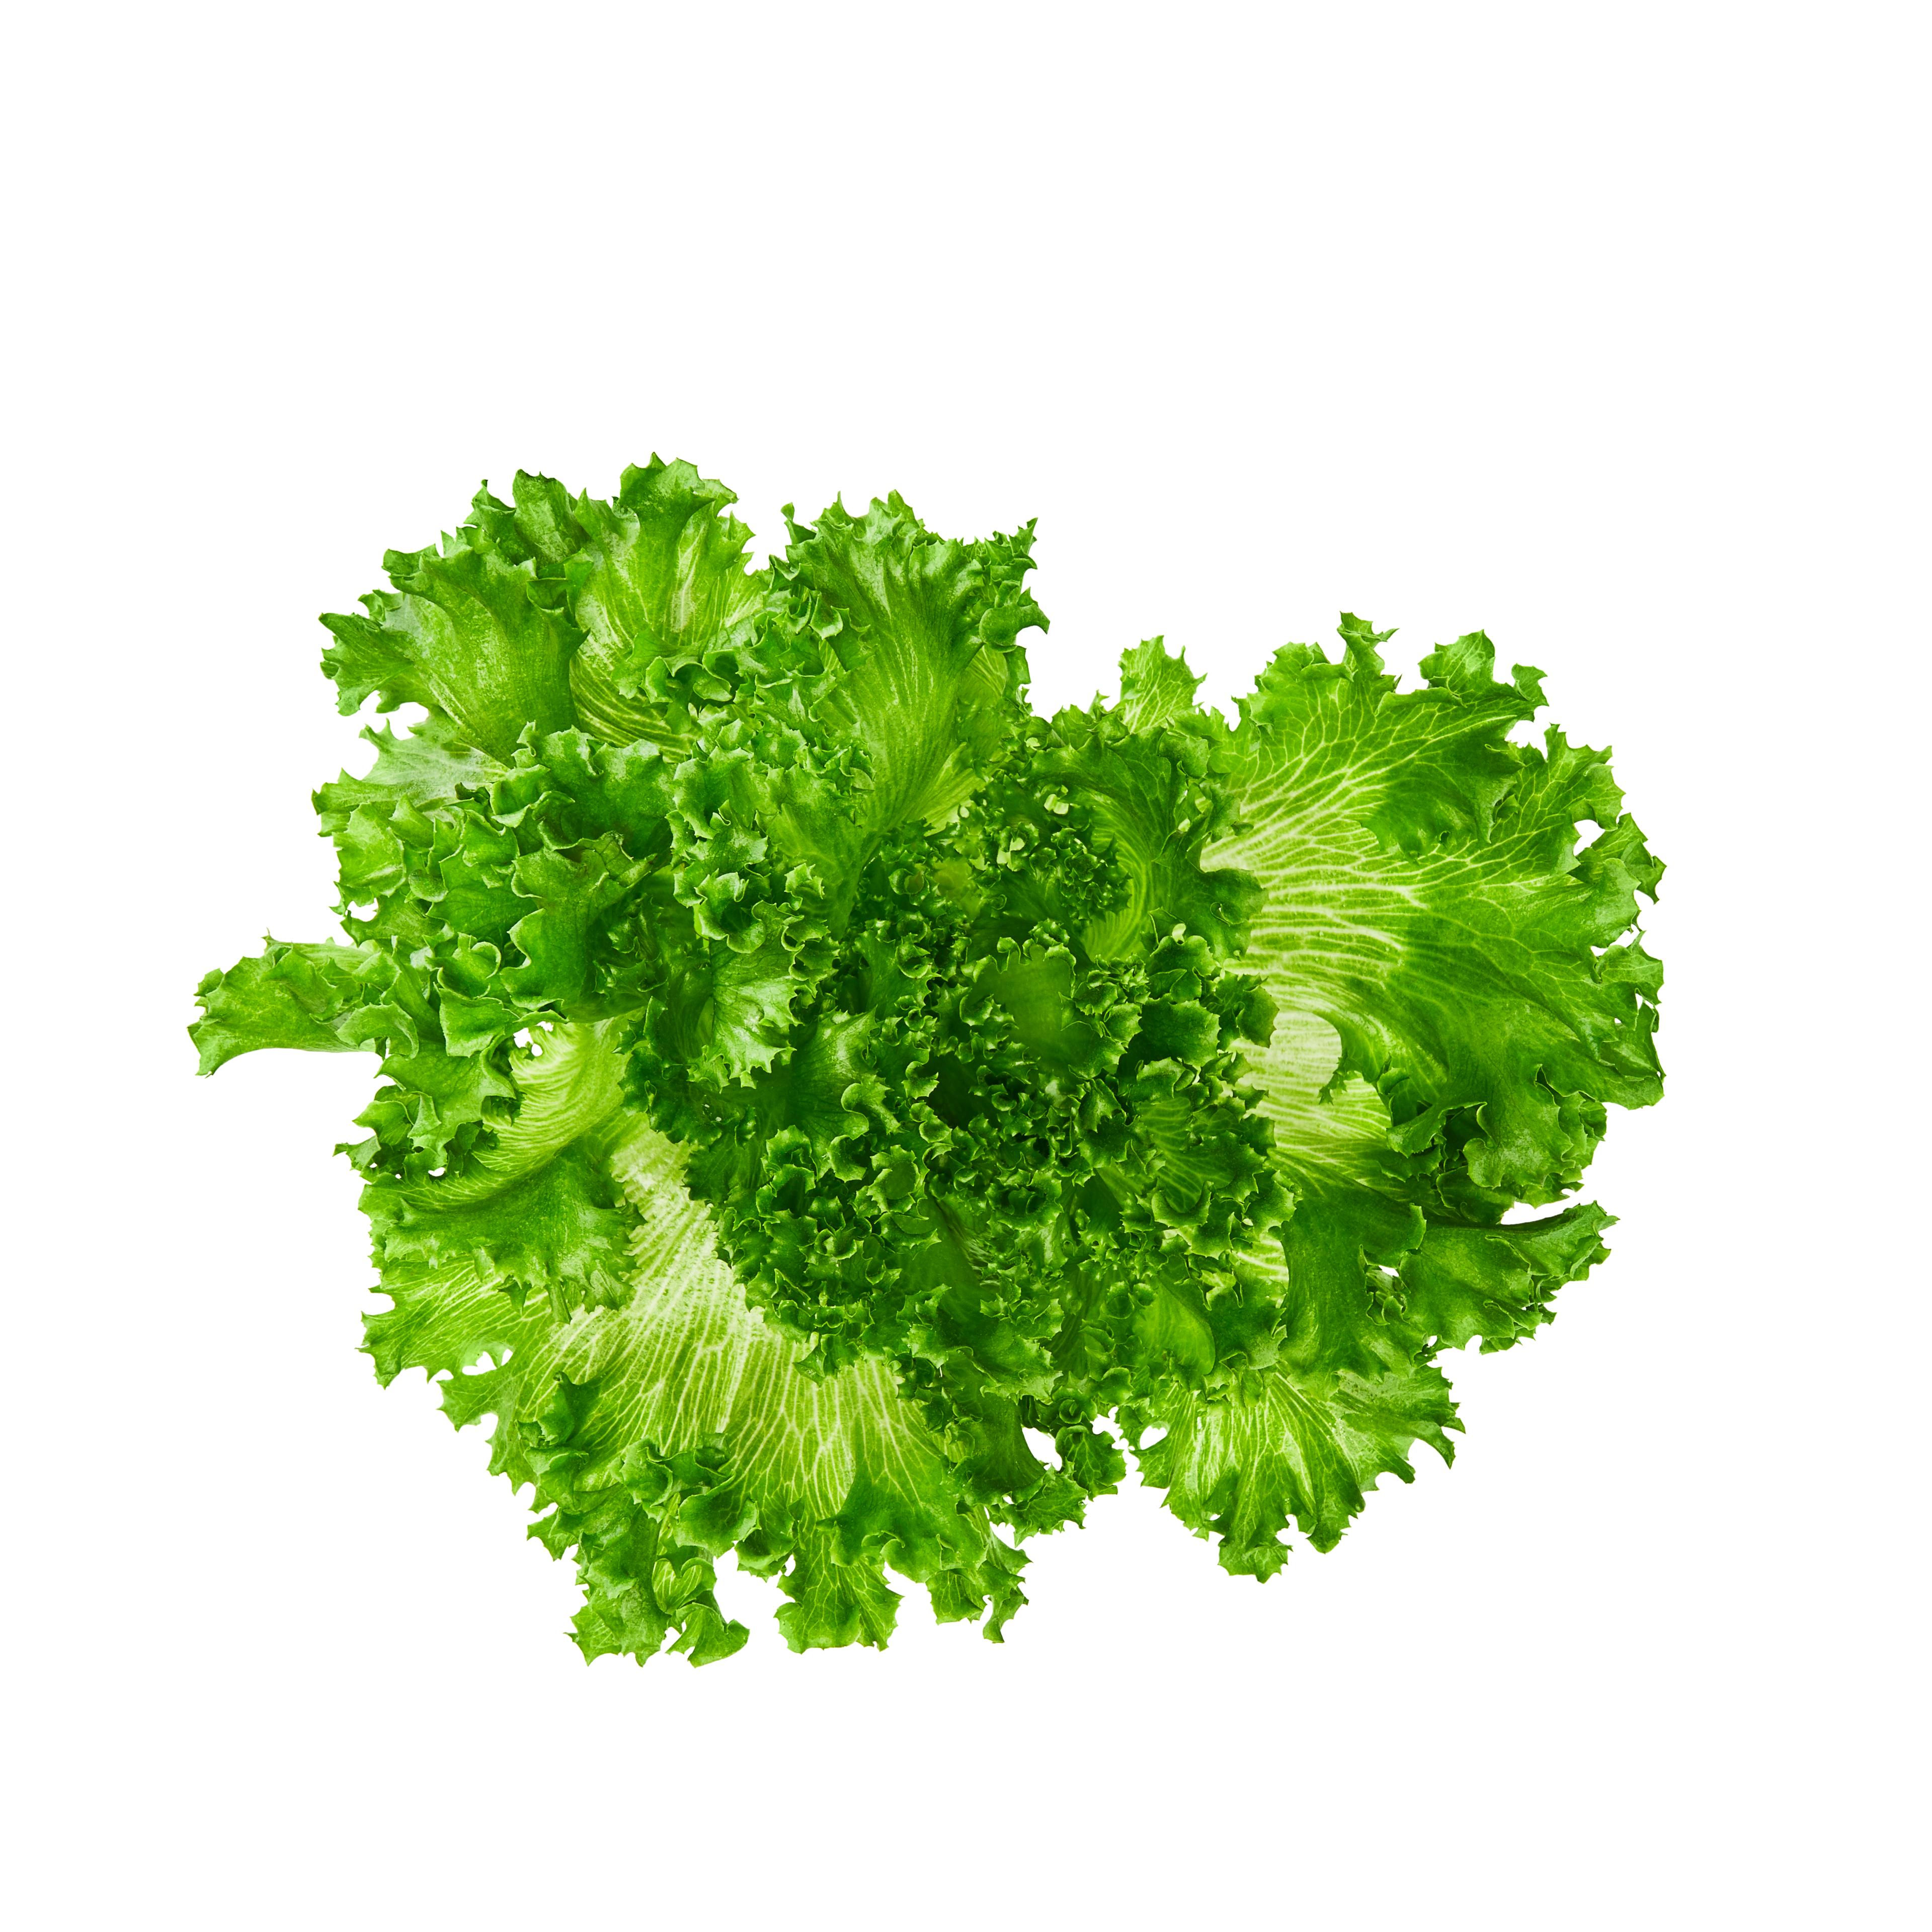 Crystal lettuce